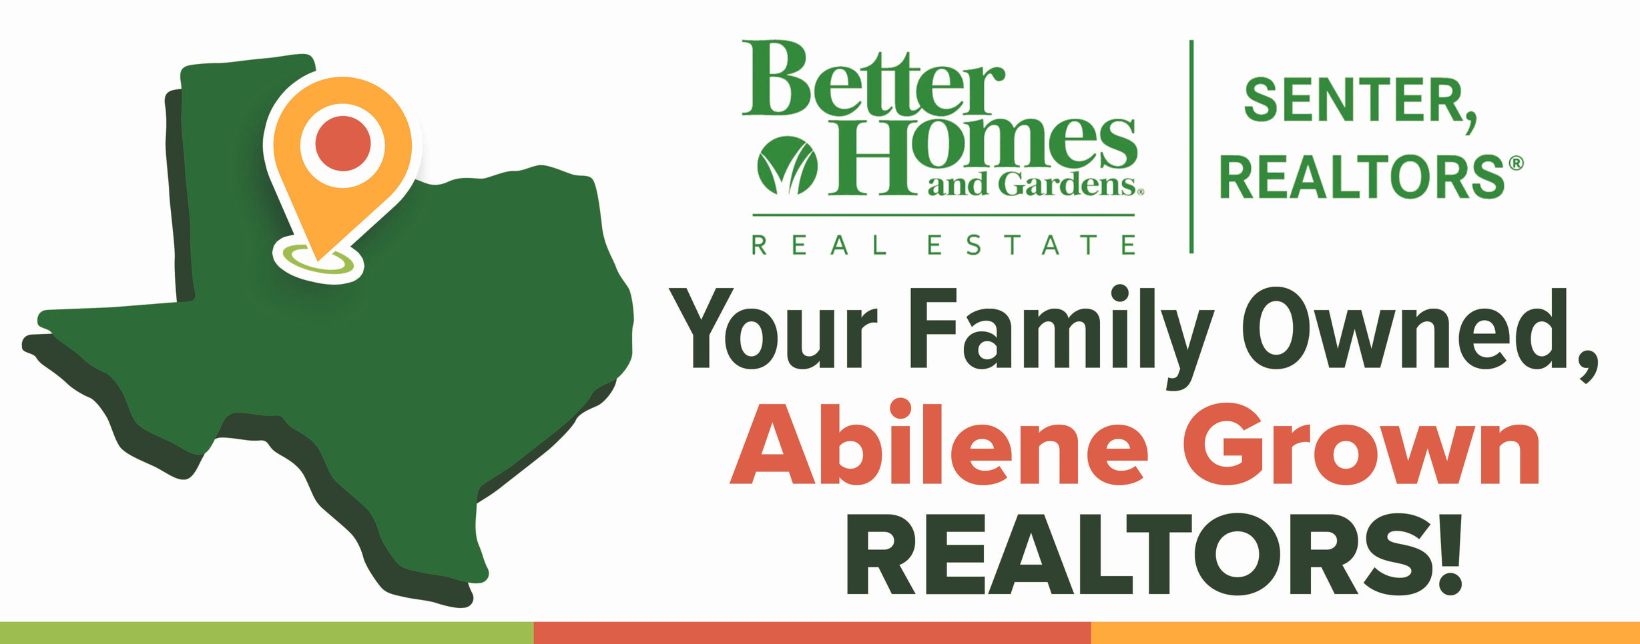 Abilene Grown, Family Owned Real Estate Company